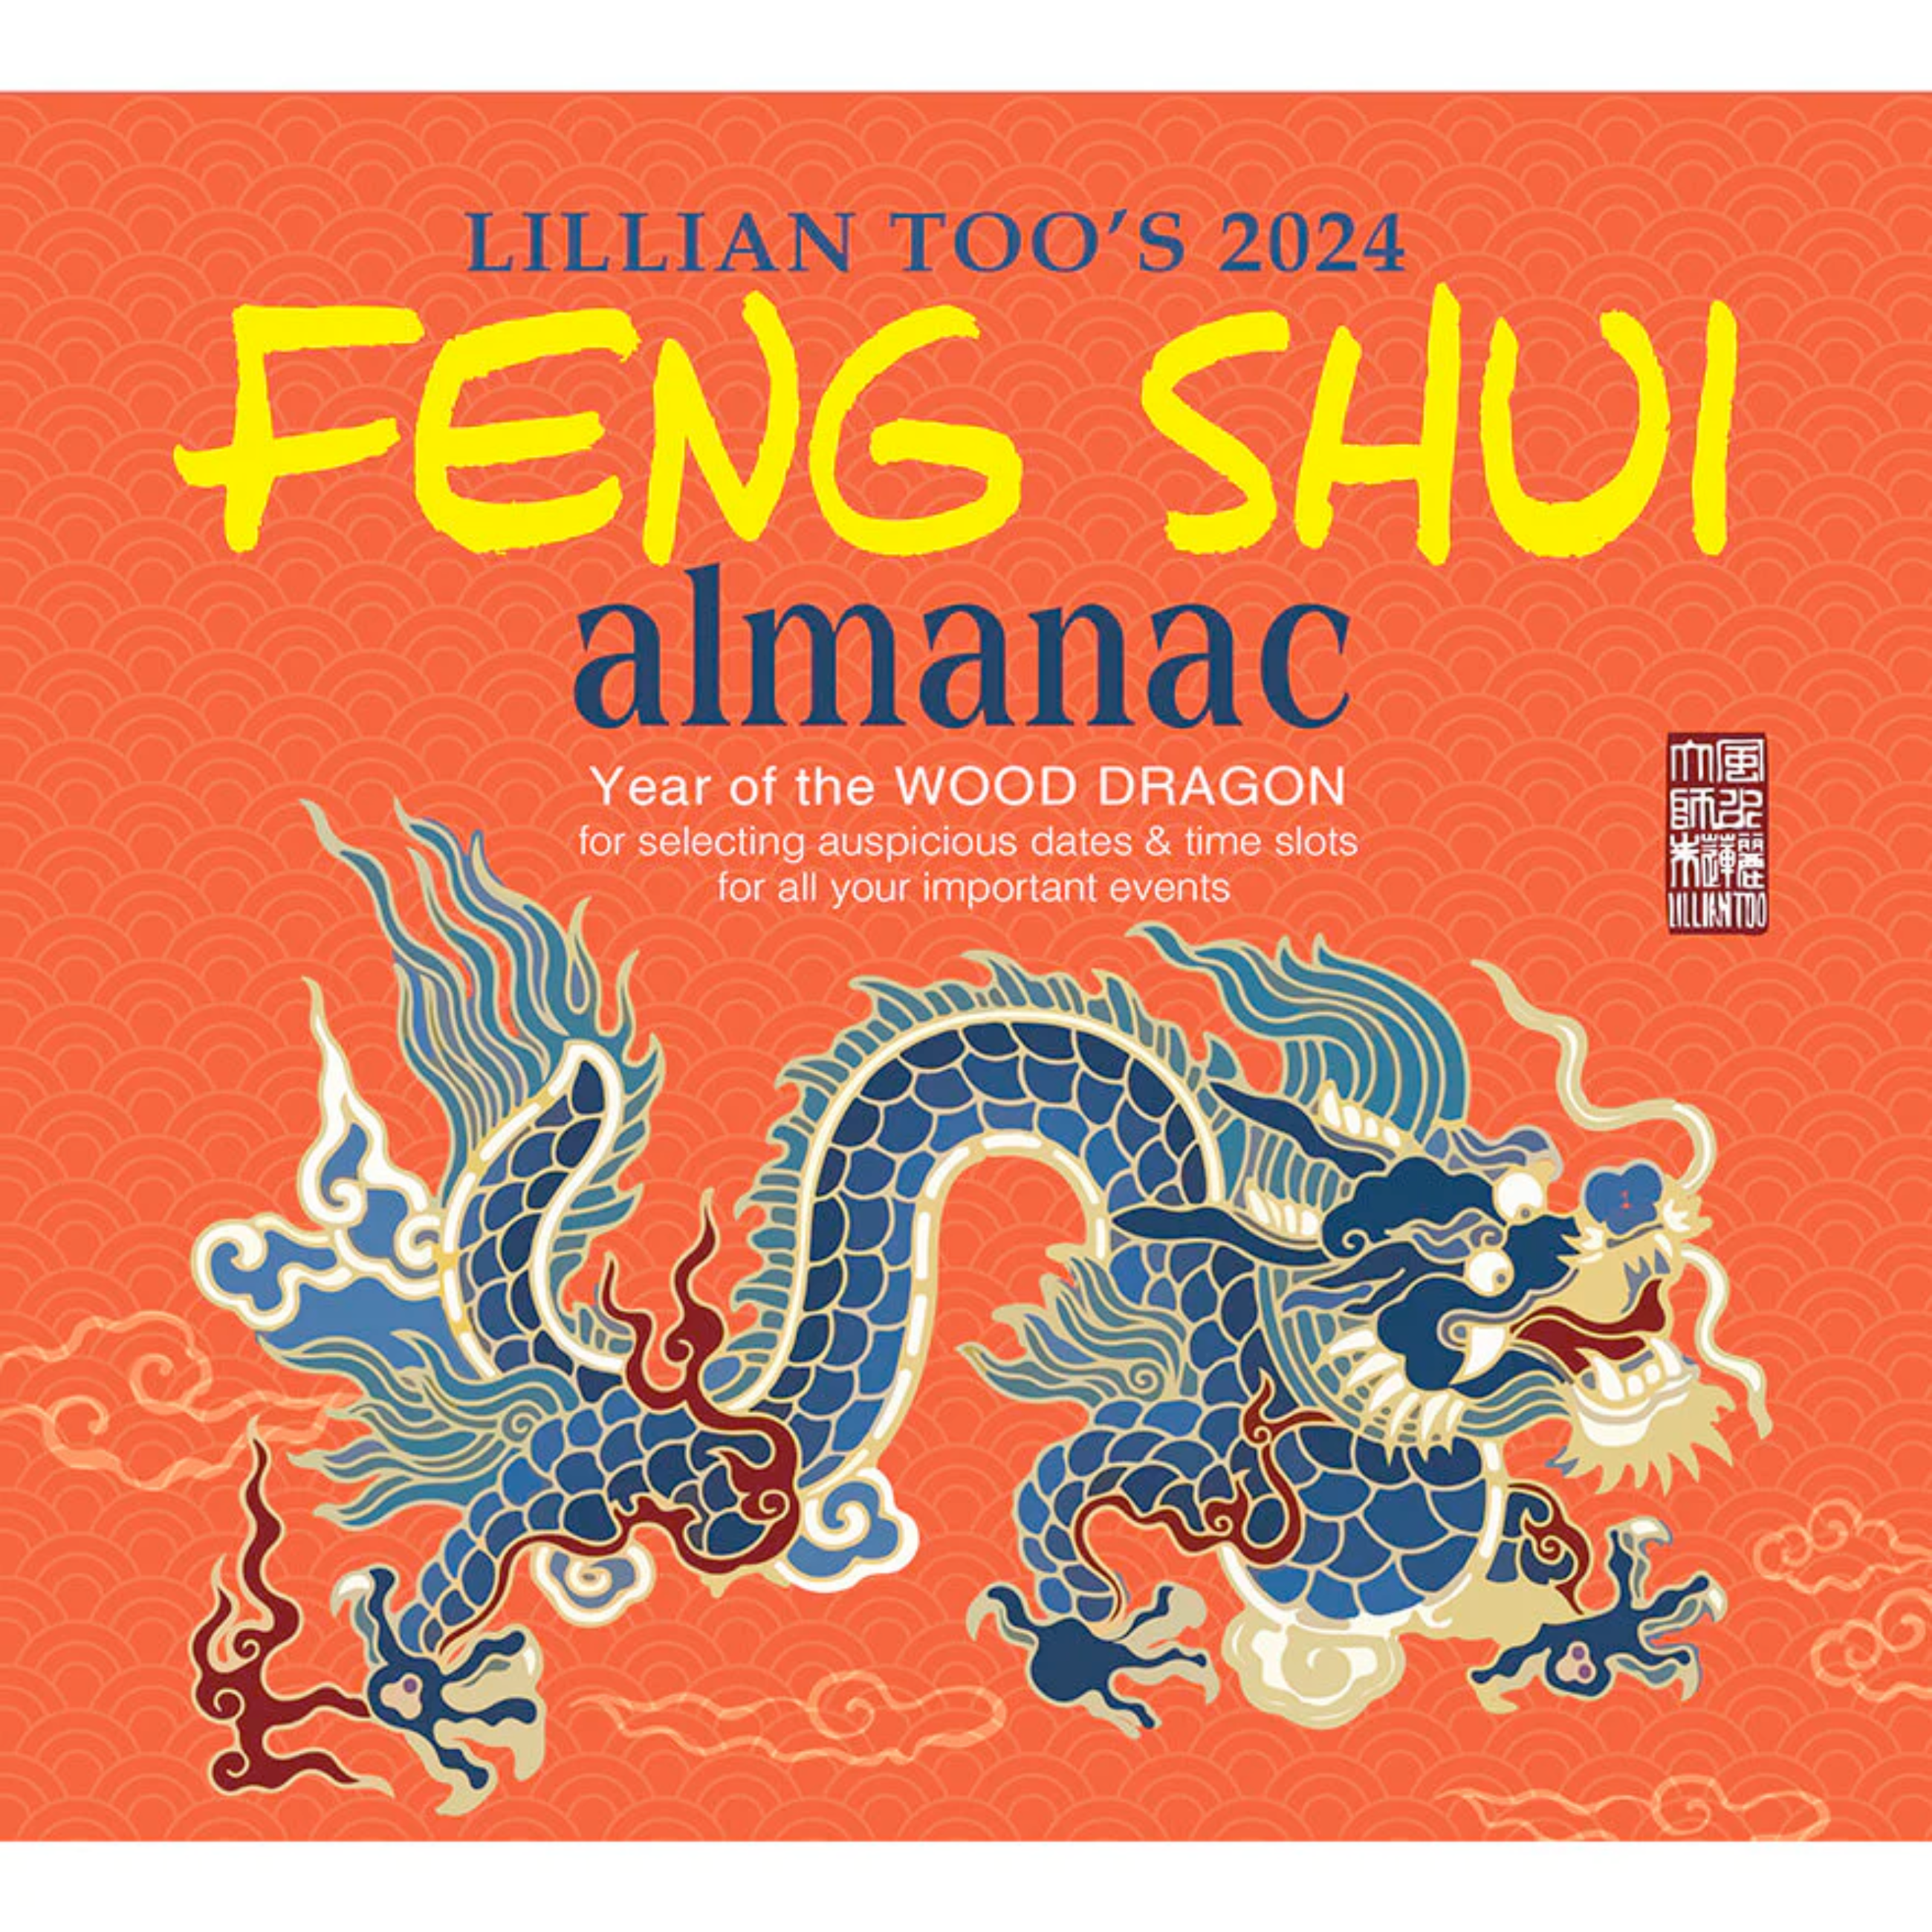 LILLIAN TOO'S FENG SHUI 2024 ALMANAC